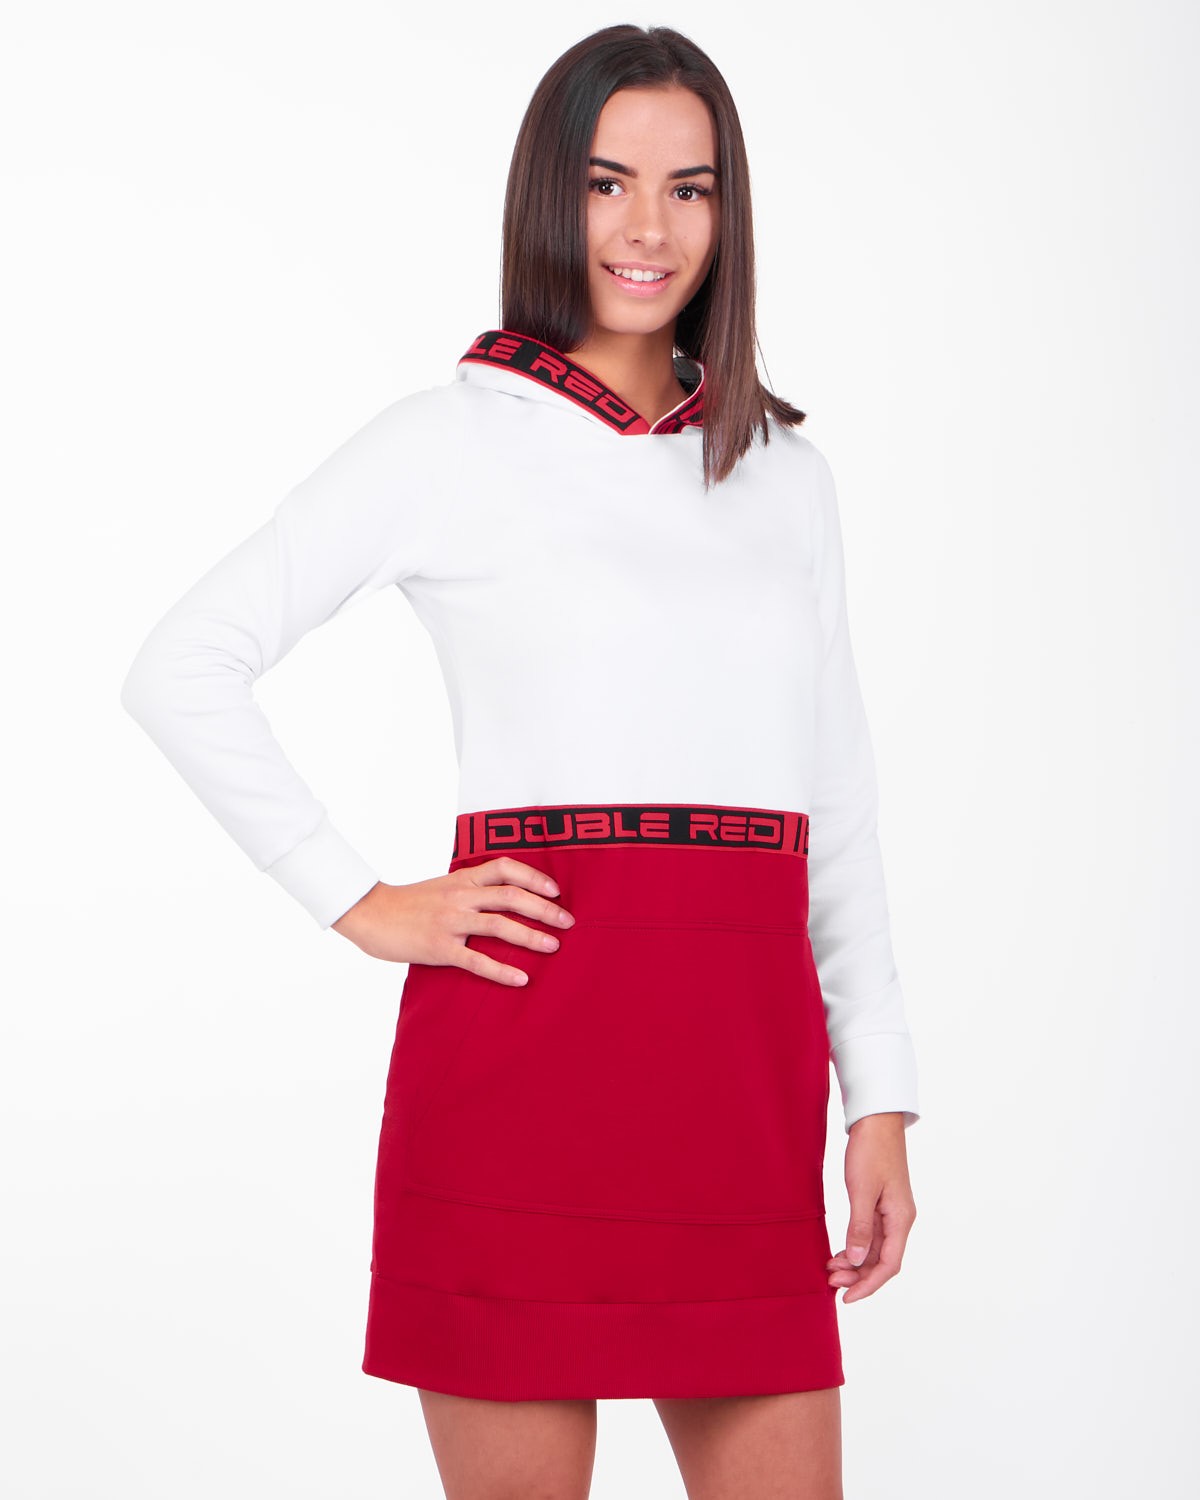 EMINENCE WHITE RED DRESS